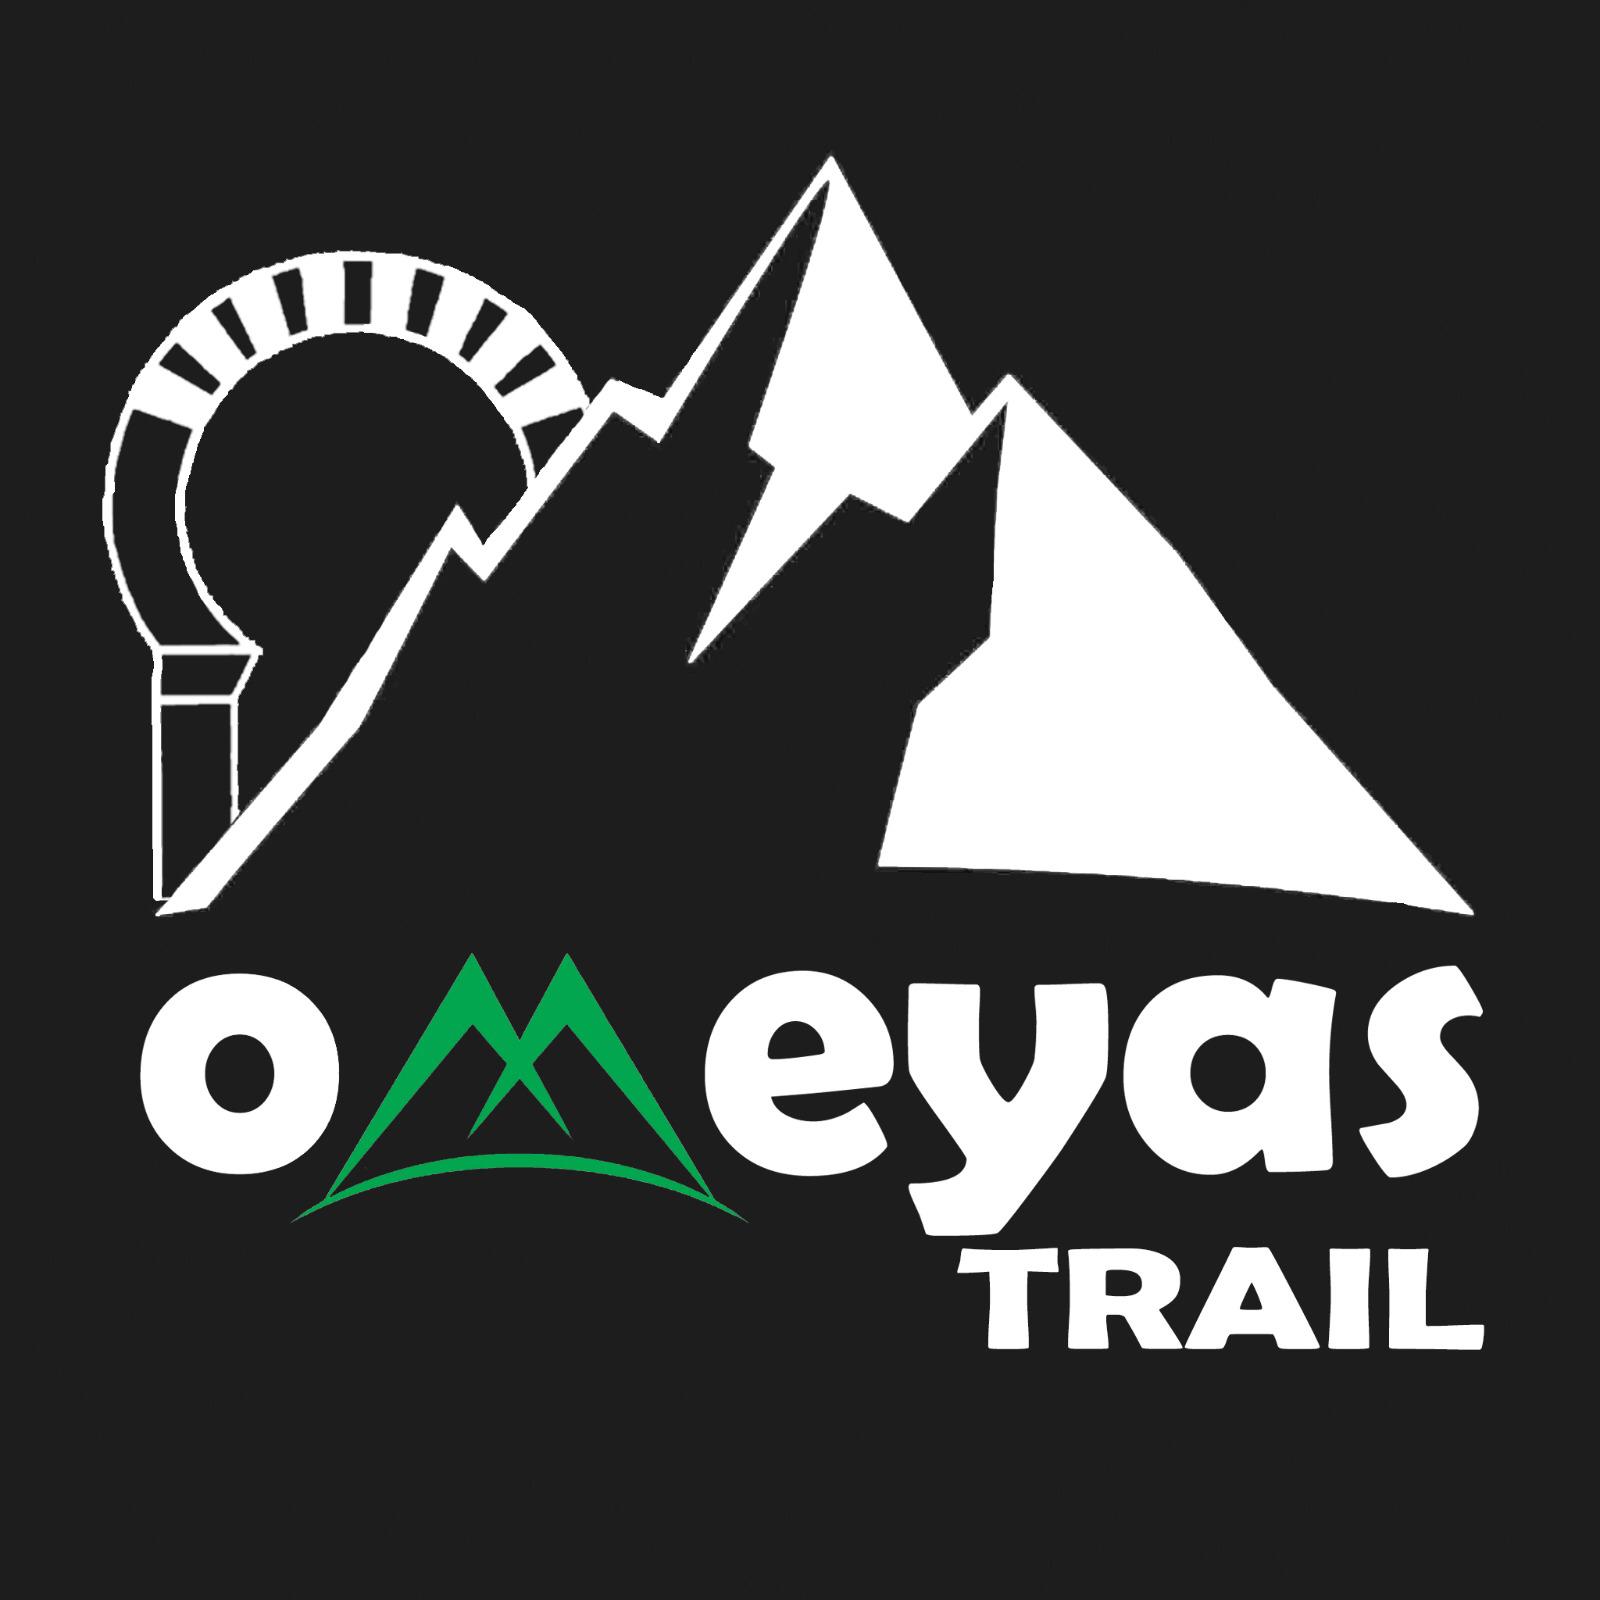 Omeyas Trail